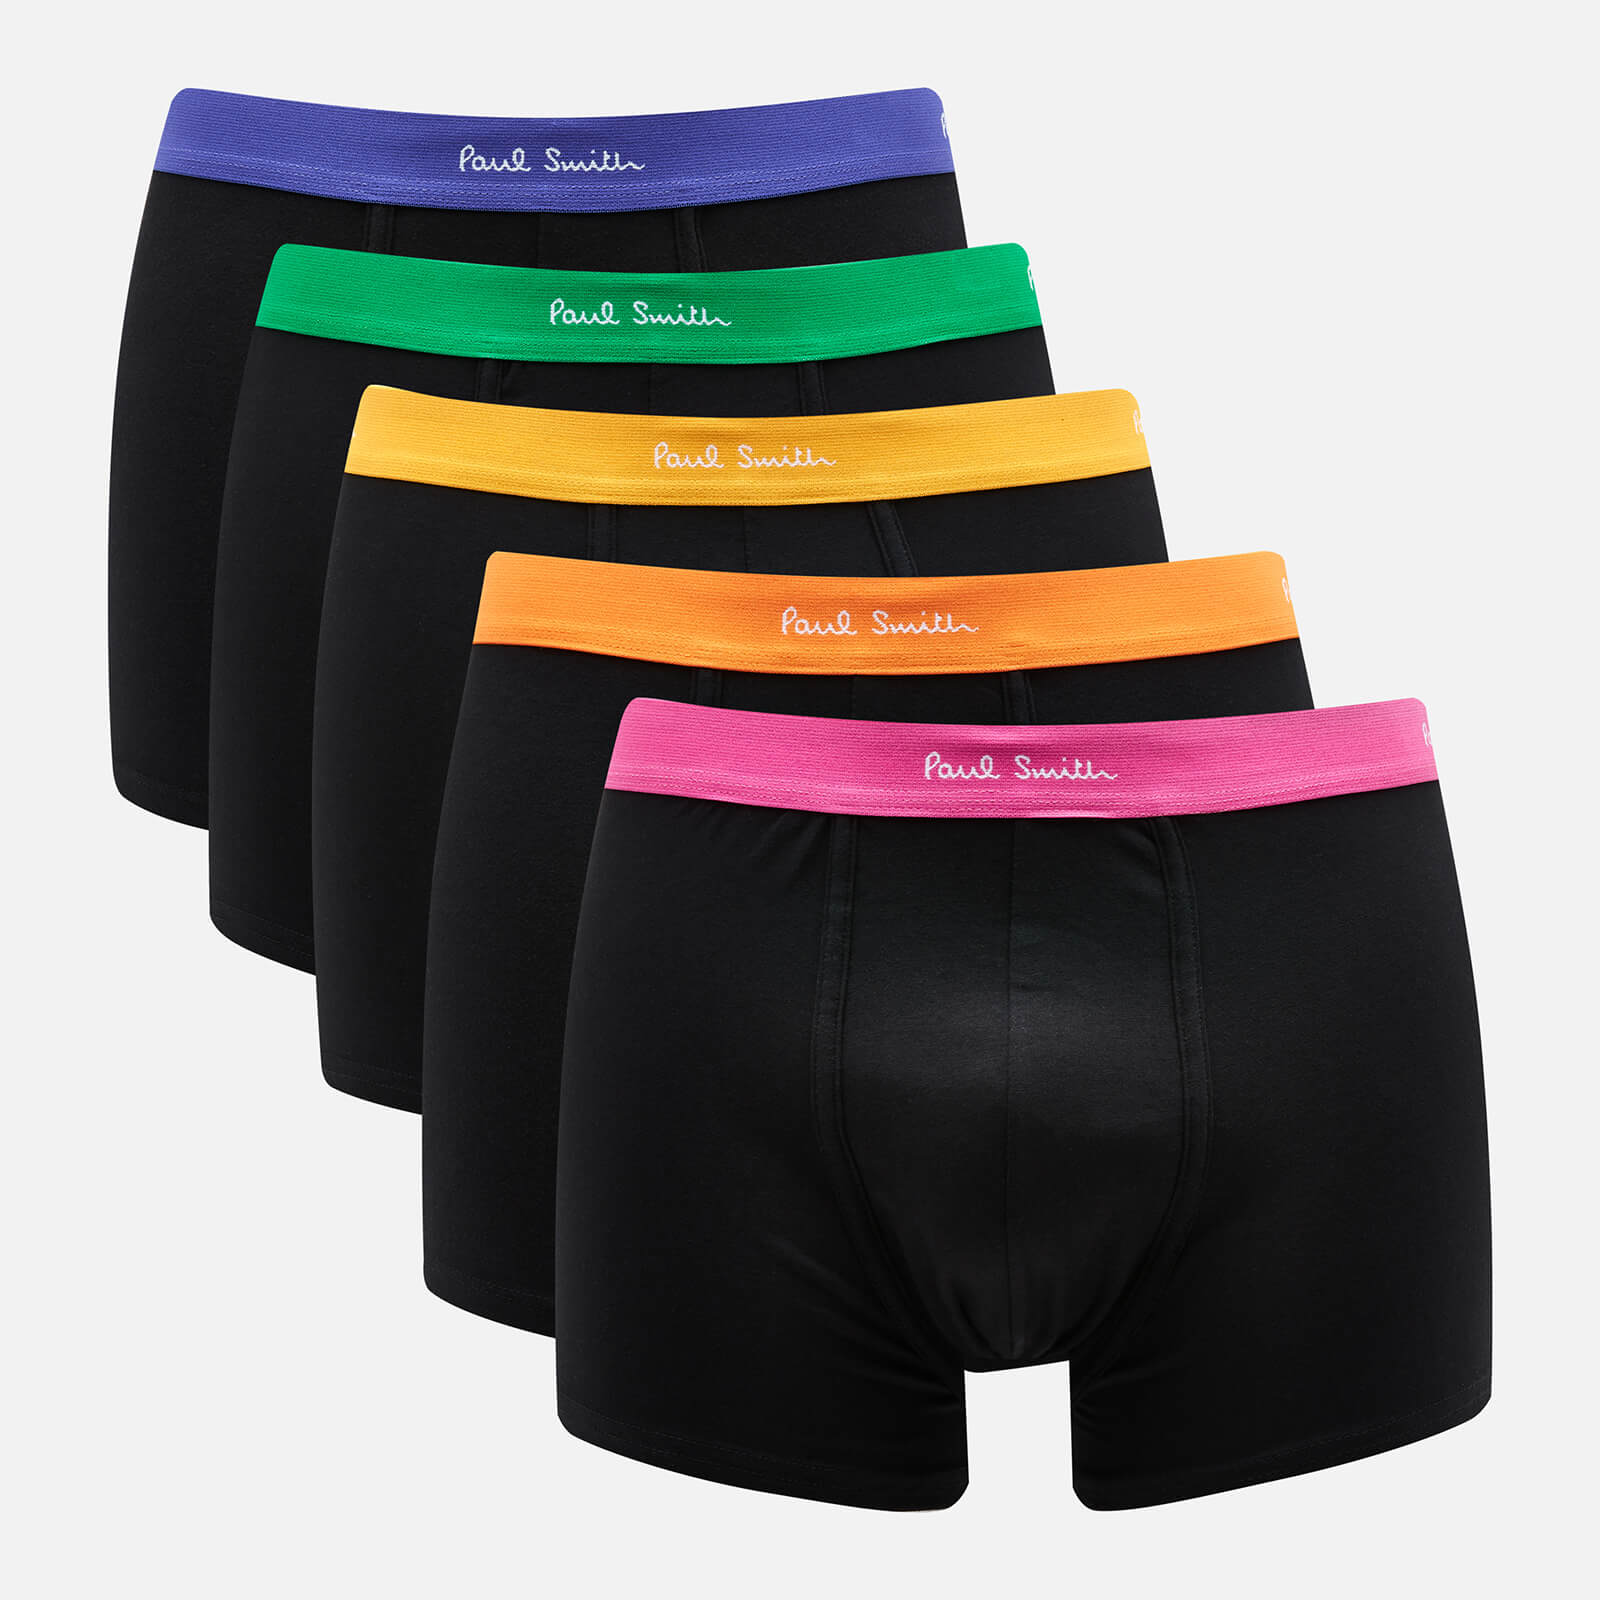 PS Paul Smith Men's 5-Pack Trunk Boxer Shorts - Black/Multi - M